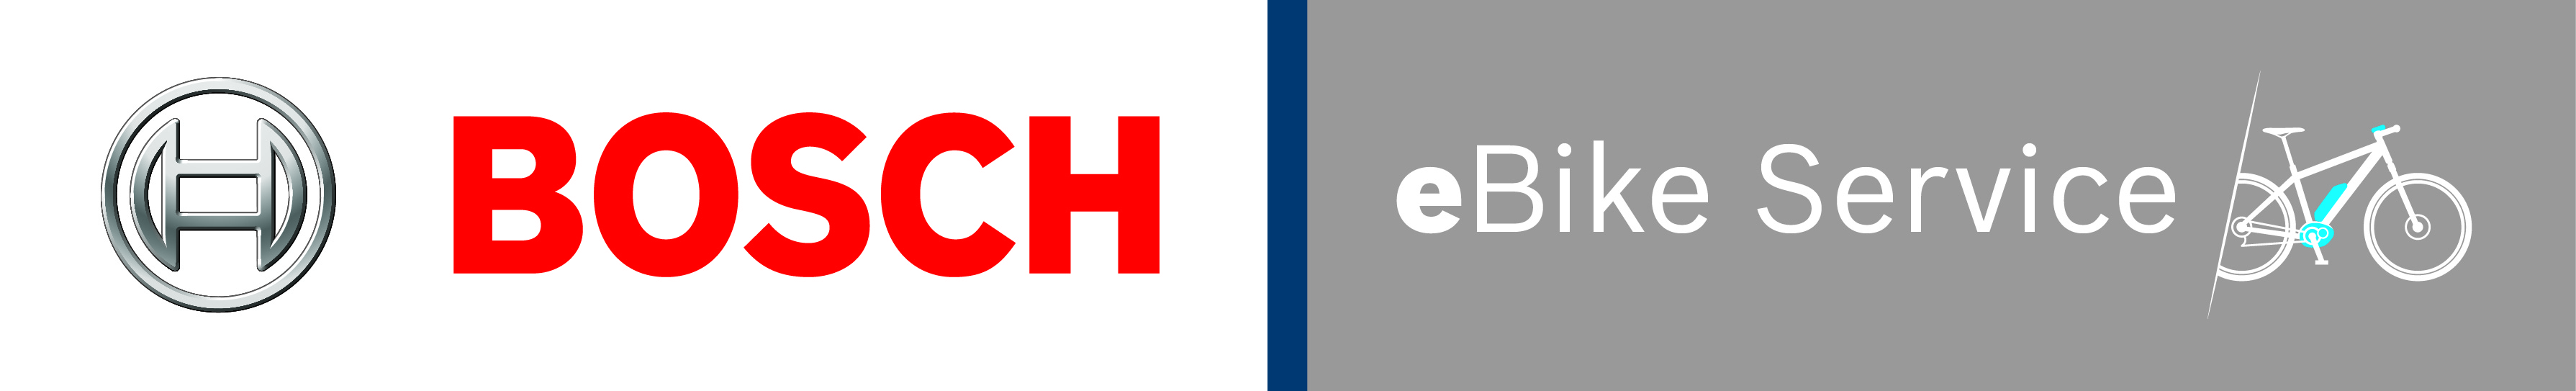 Bosch eBike Service Logo Banner